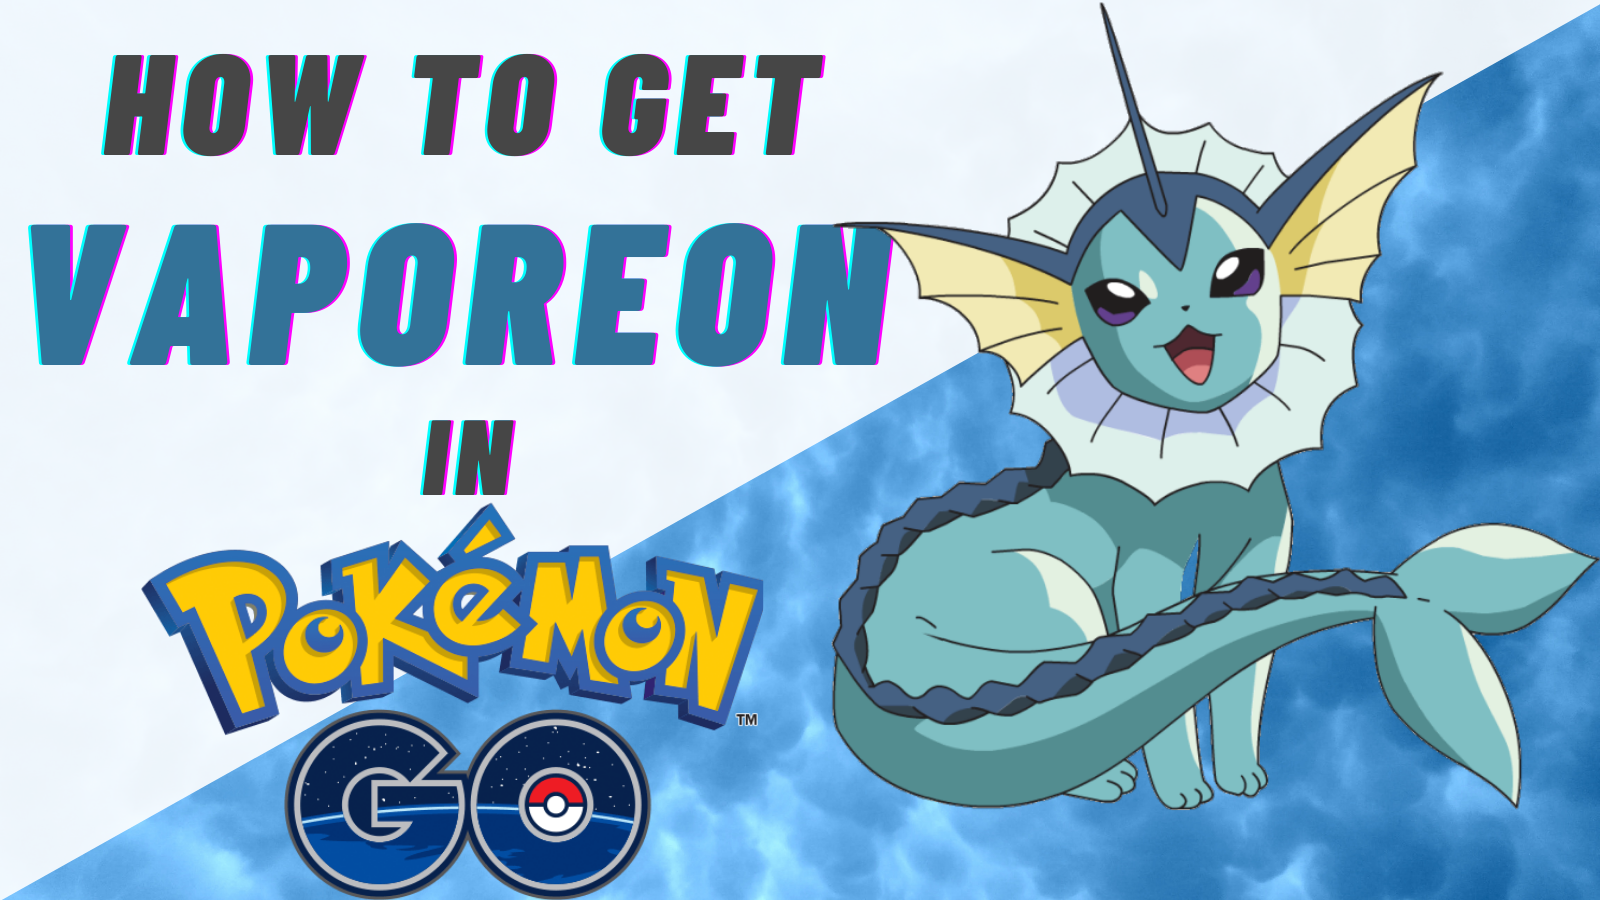 Pokemon Go Gen 2 Tip: Evolve Eevee Into Espeon And Umbreon, Here's How